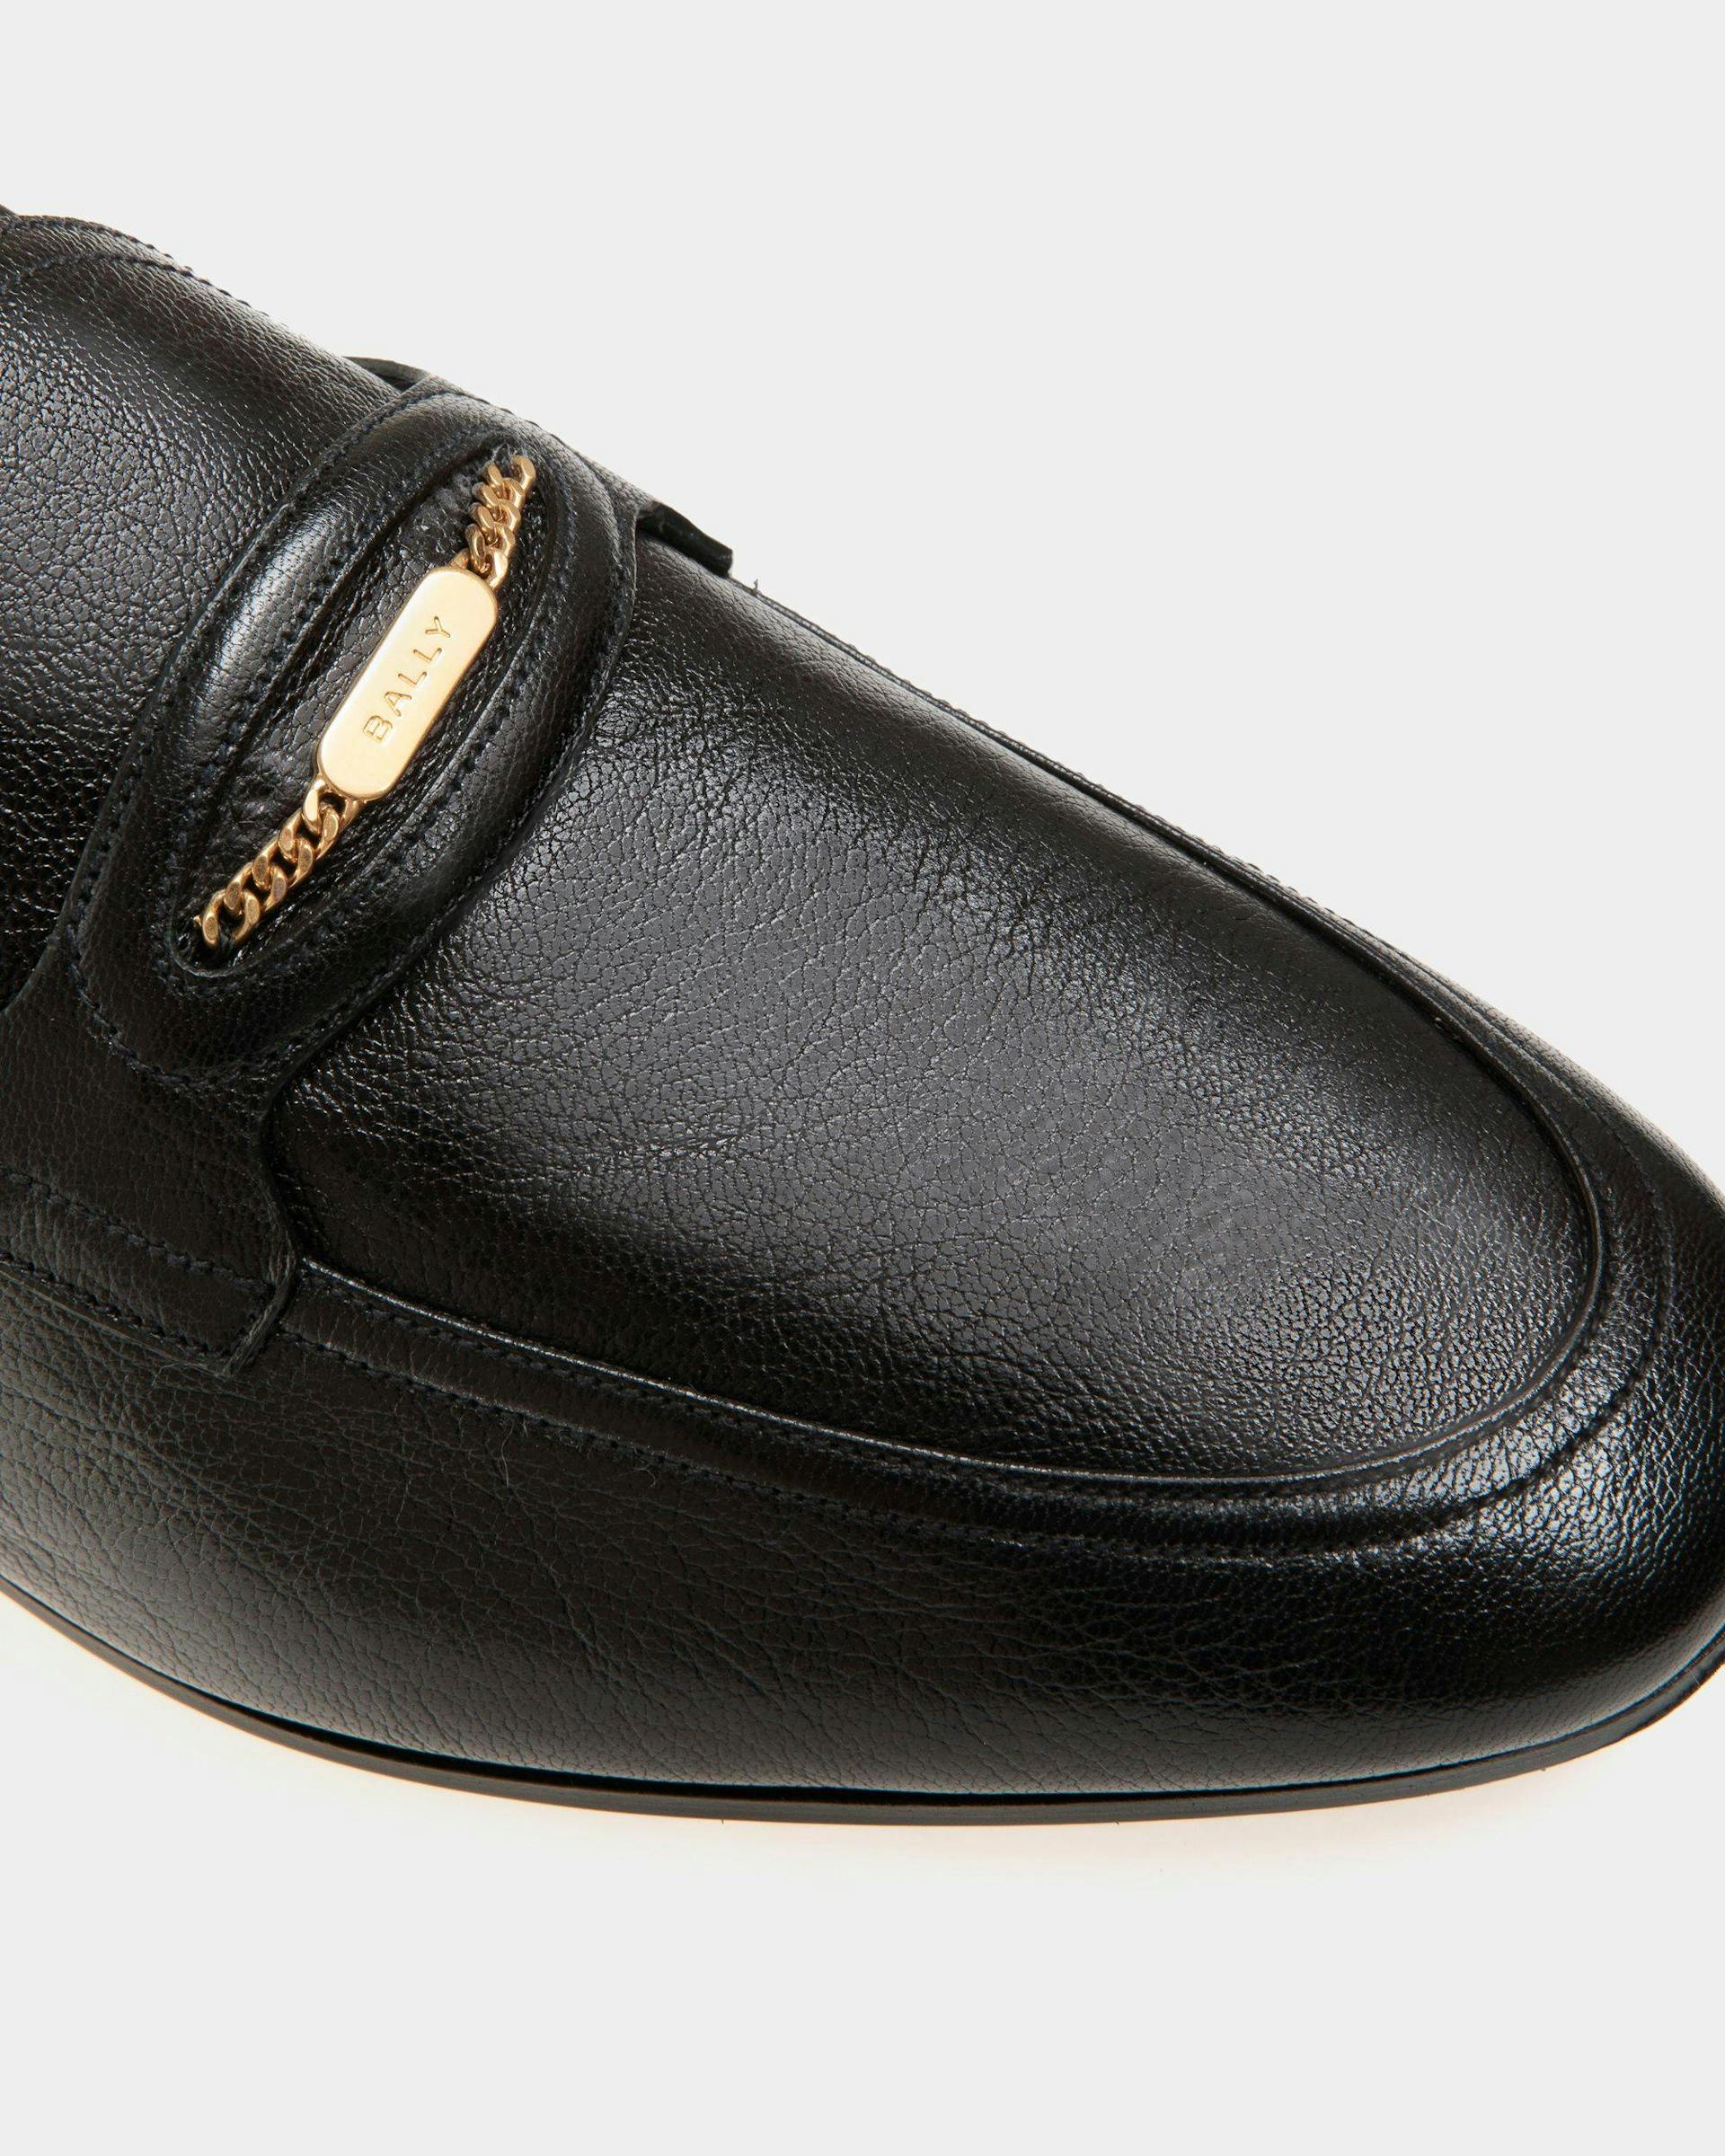 Men's Plume Loafer in Black Grained Leather | Bally | Still Life Detail